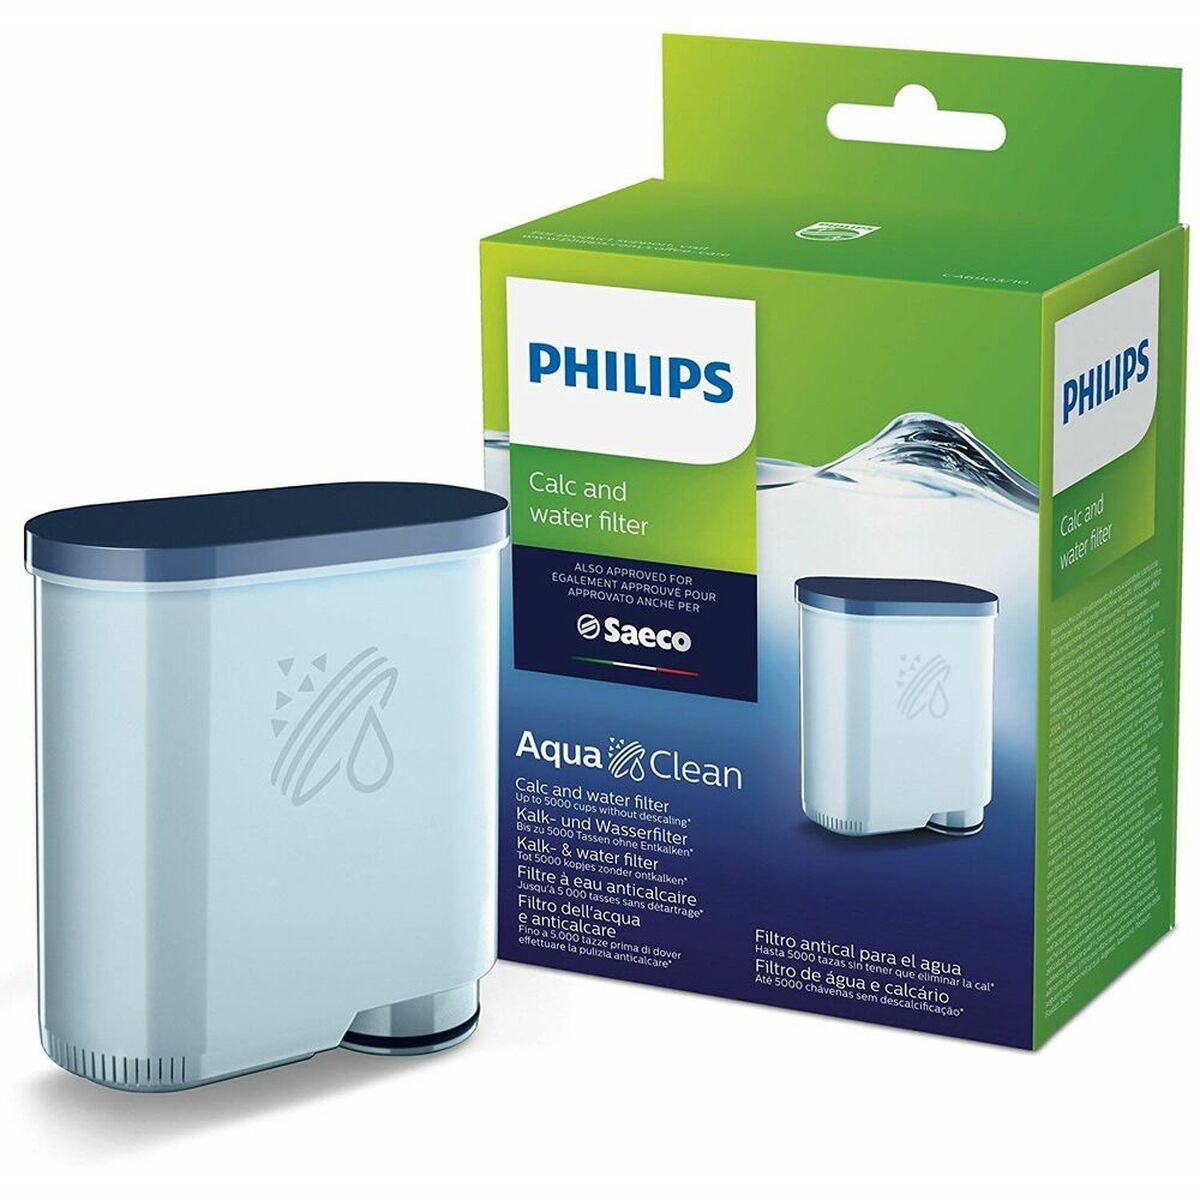 Filter für Karaffe Philips CA6903/10 AquaClean Kaffeemaschine